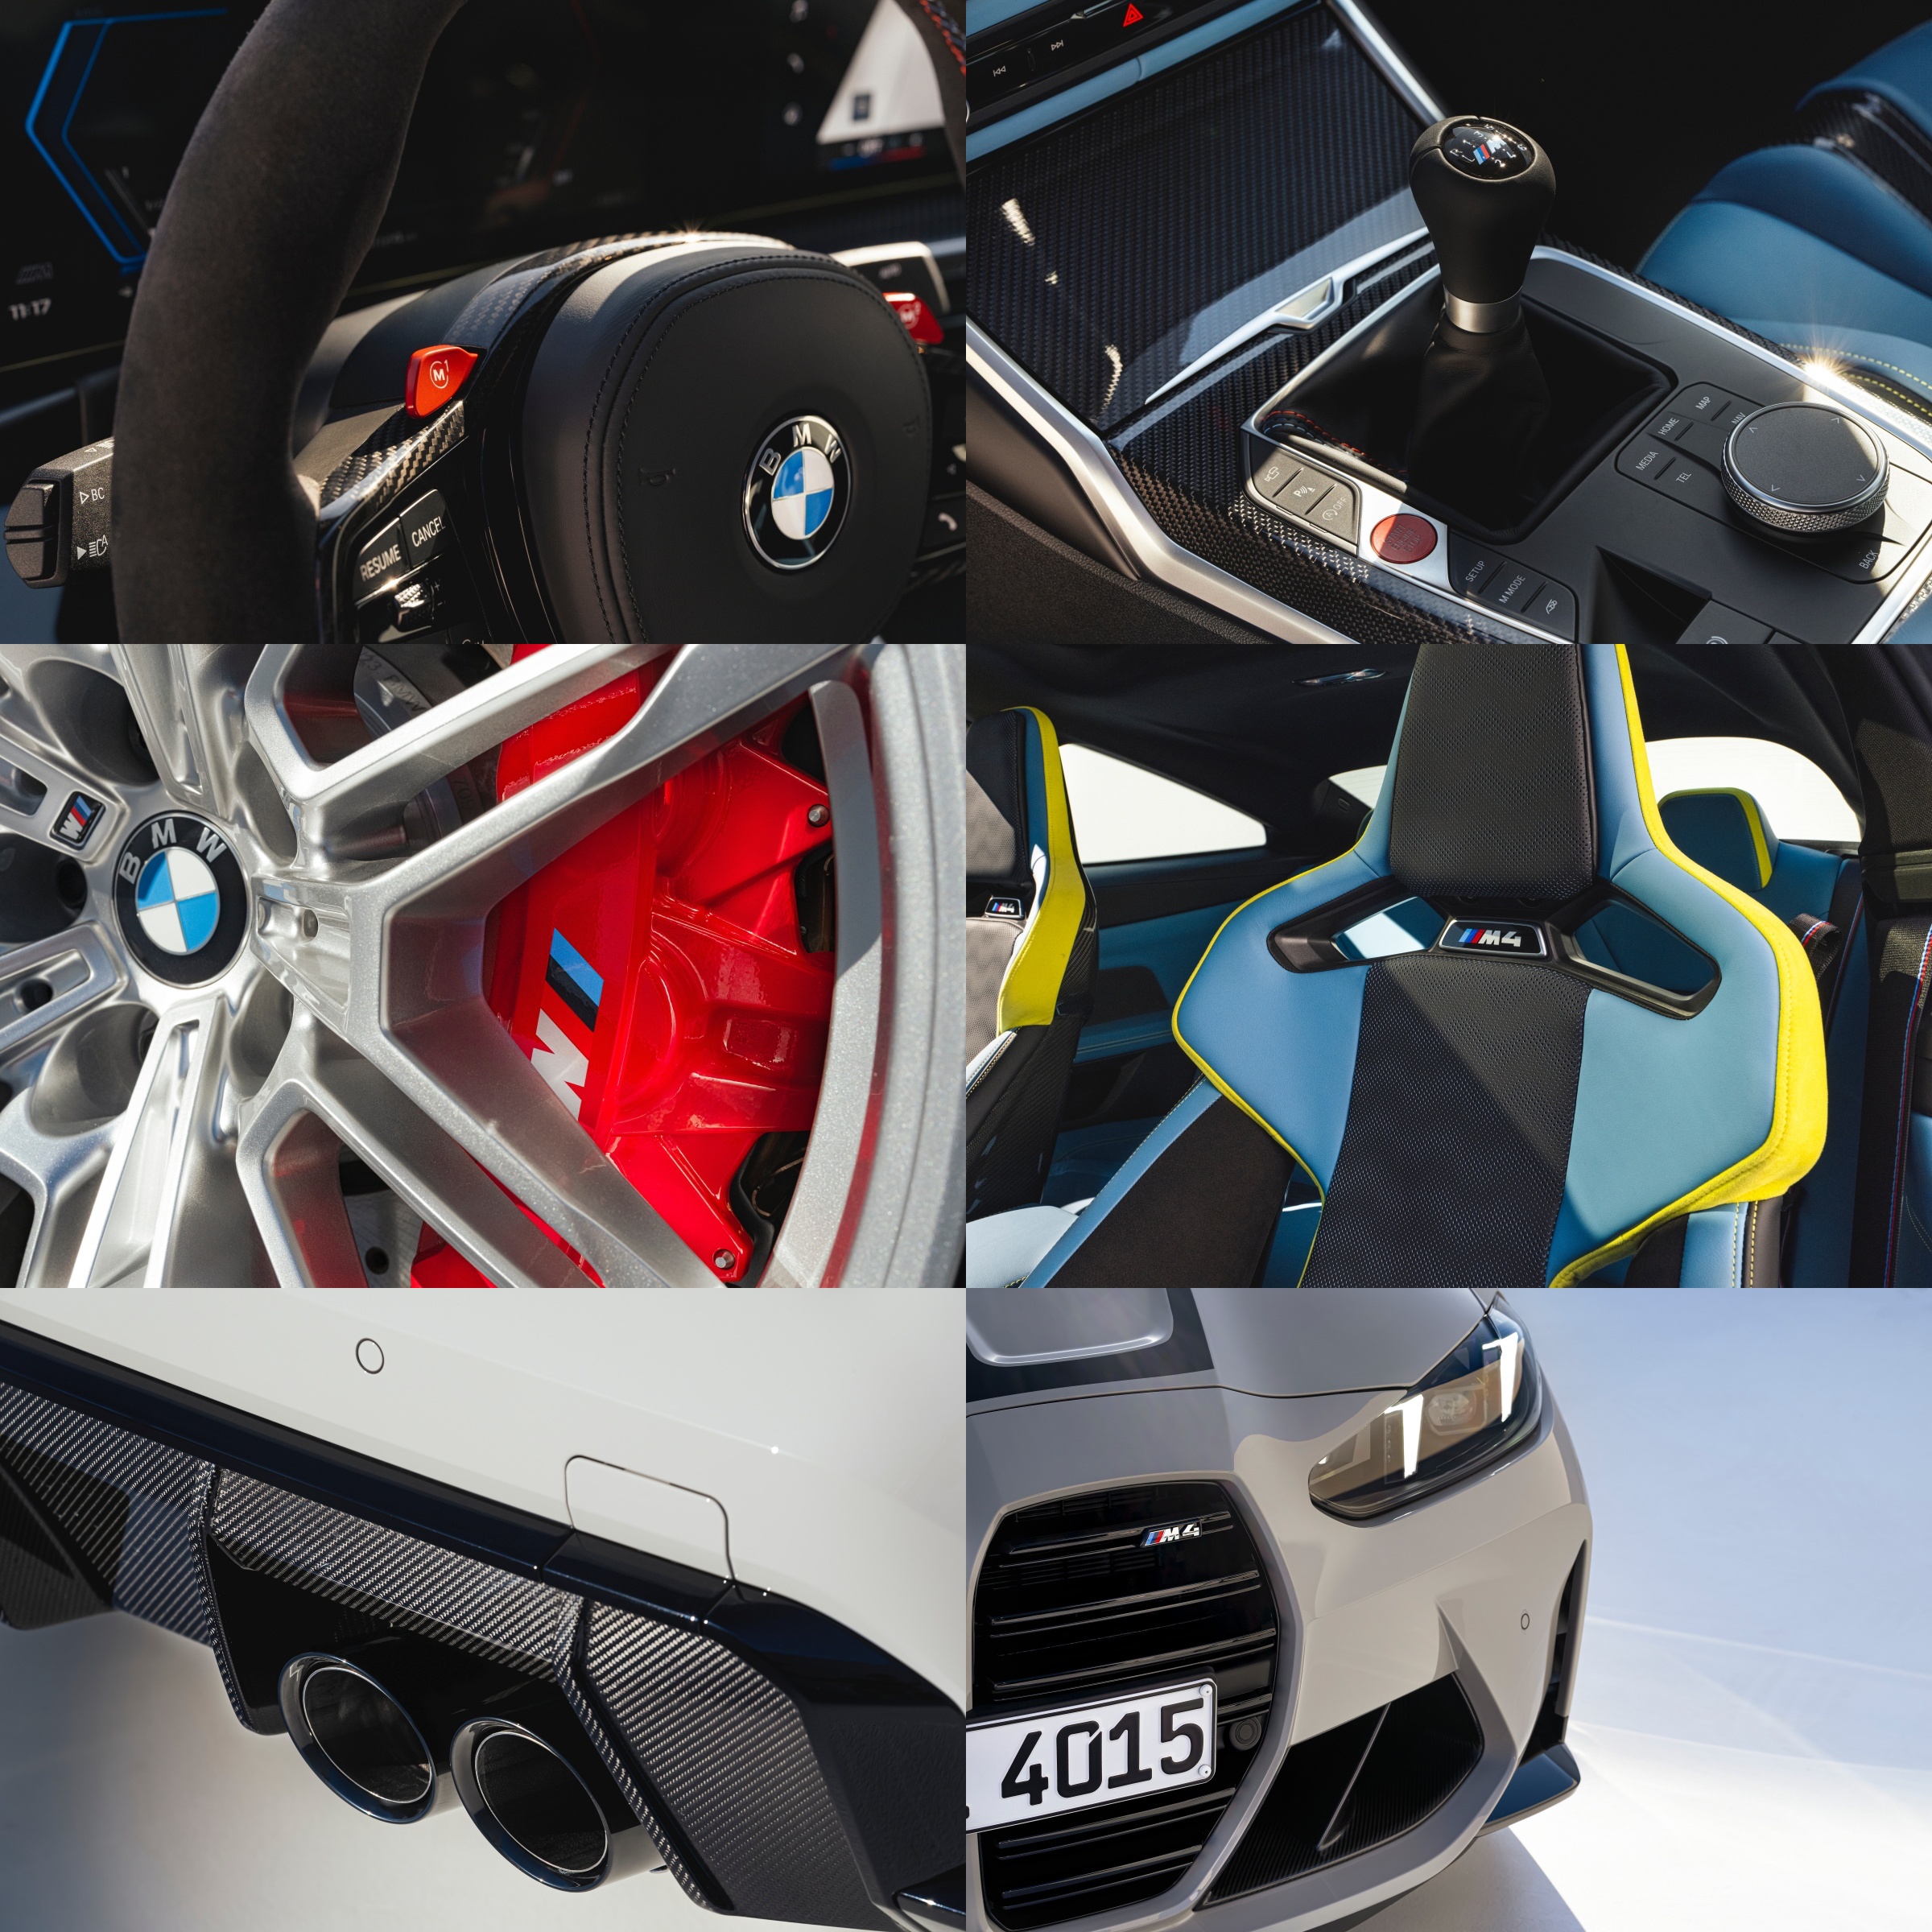 'BMW M4 쿠페'의 핸들, 기어, 휠, 시트 등 세부 모습을 촬영한 사진이다.